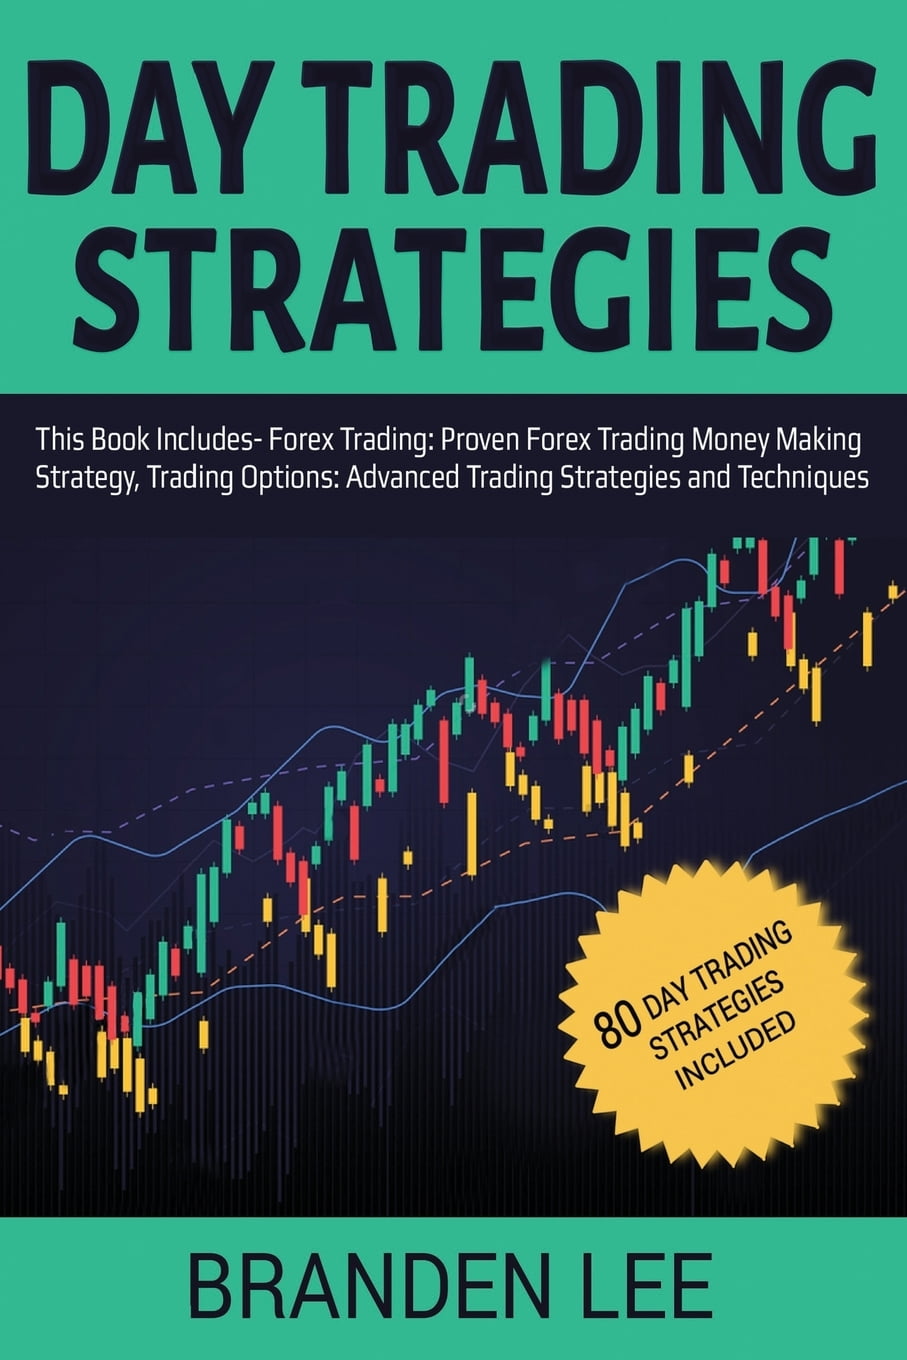 Trading Book Adalah: Panduan Lengkap untuk Memahami dan Menggunakan Buku Trading